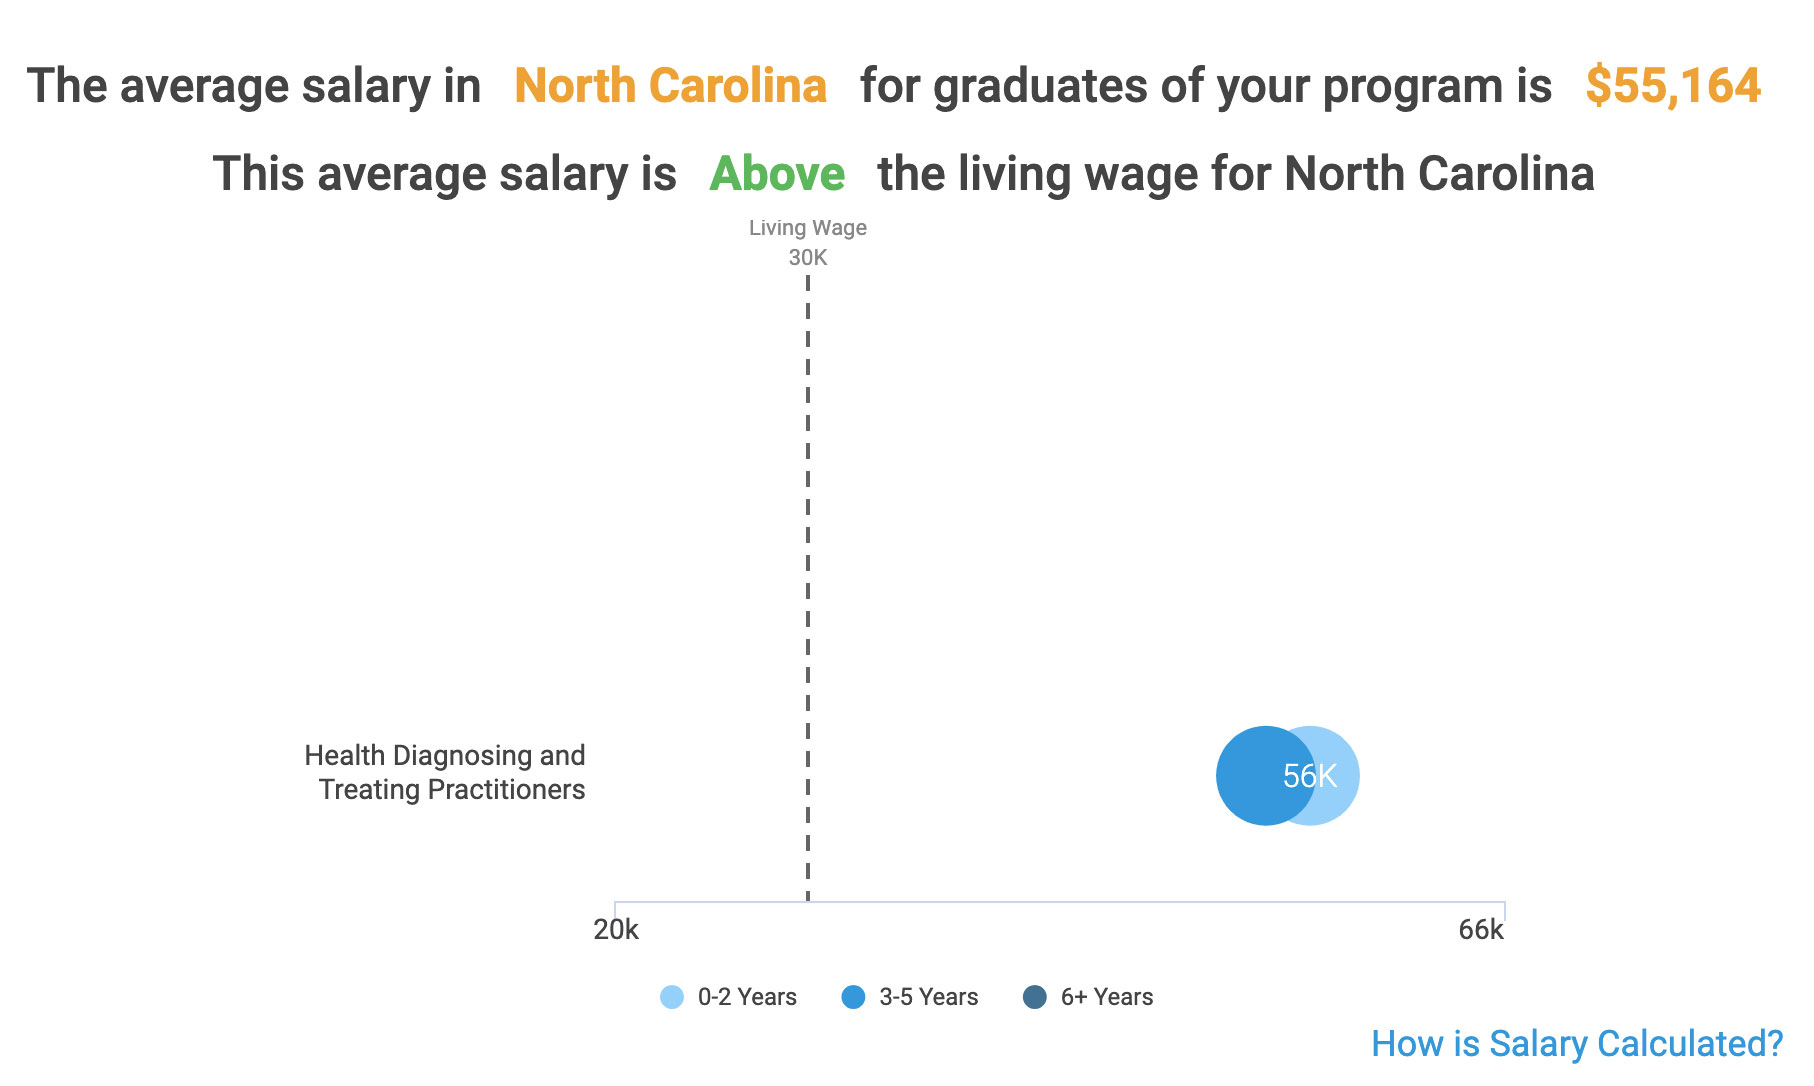 The average salary in North Carolina for graduates of this program is $55,164 (as of 2018). This average salary is above the living wage for North Carolina